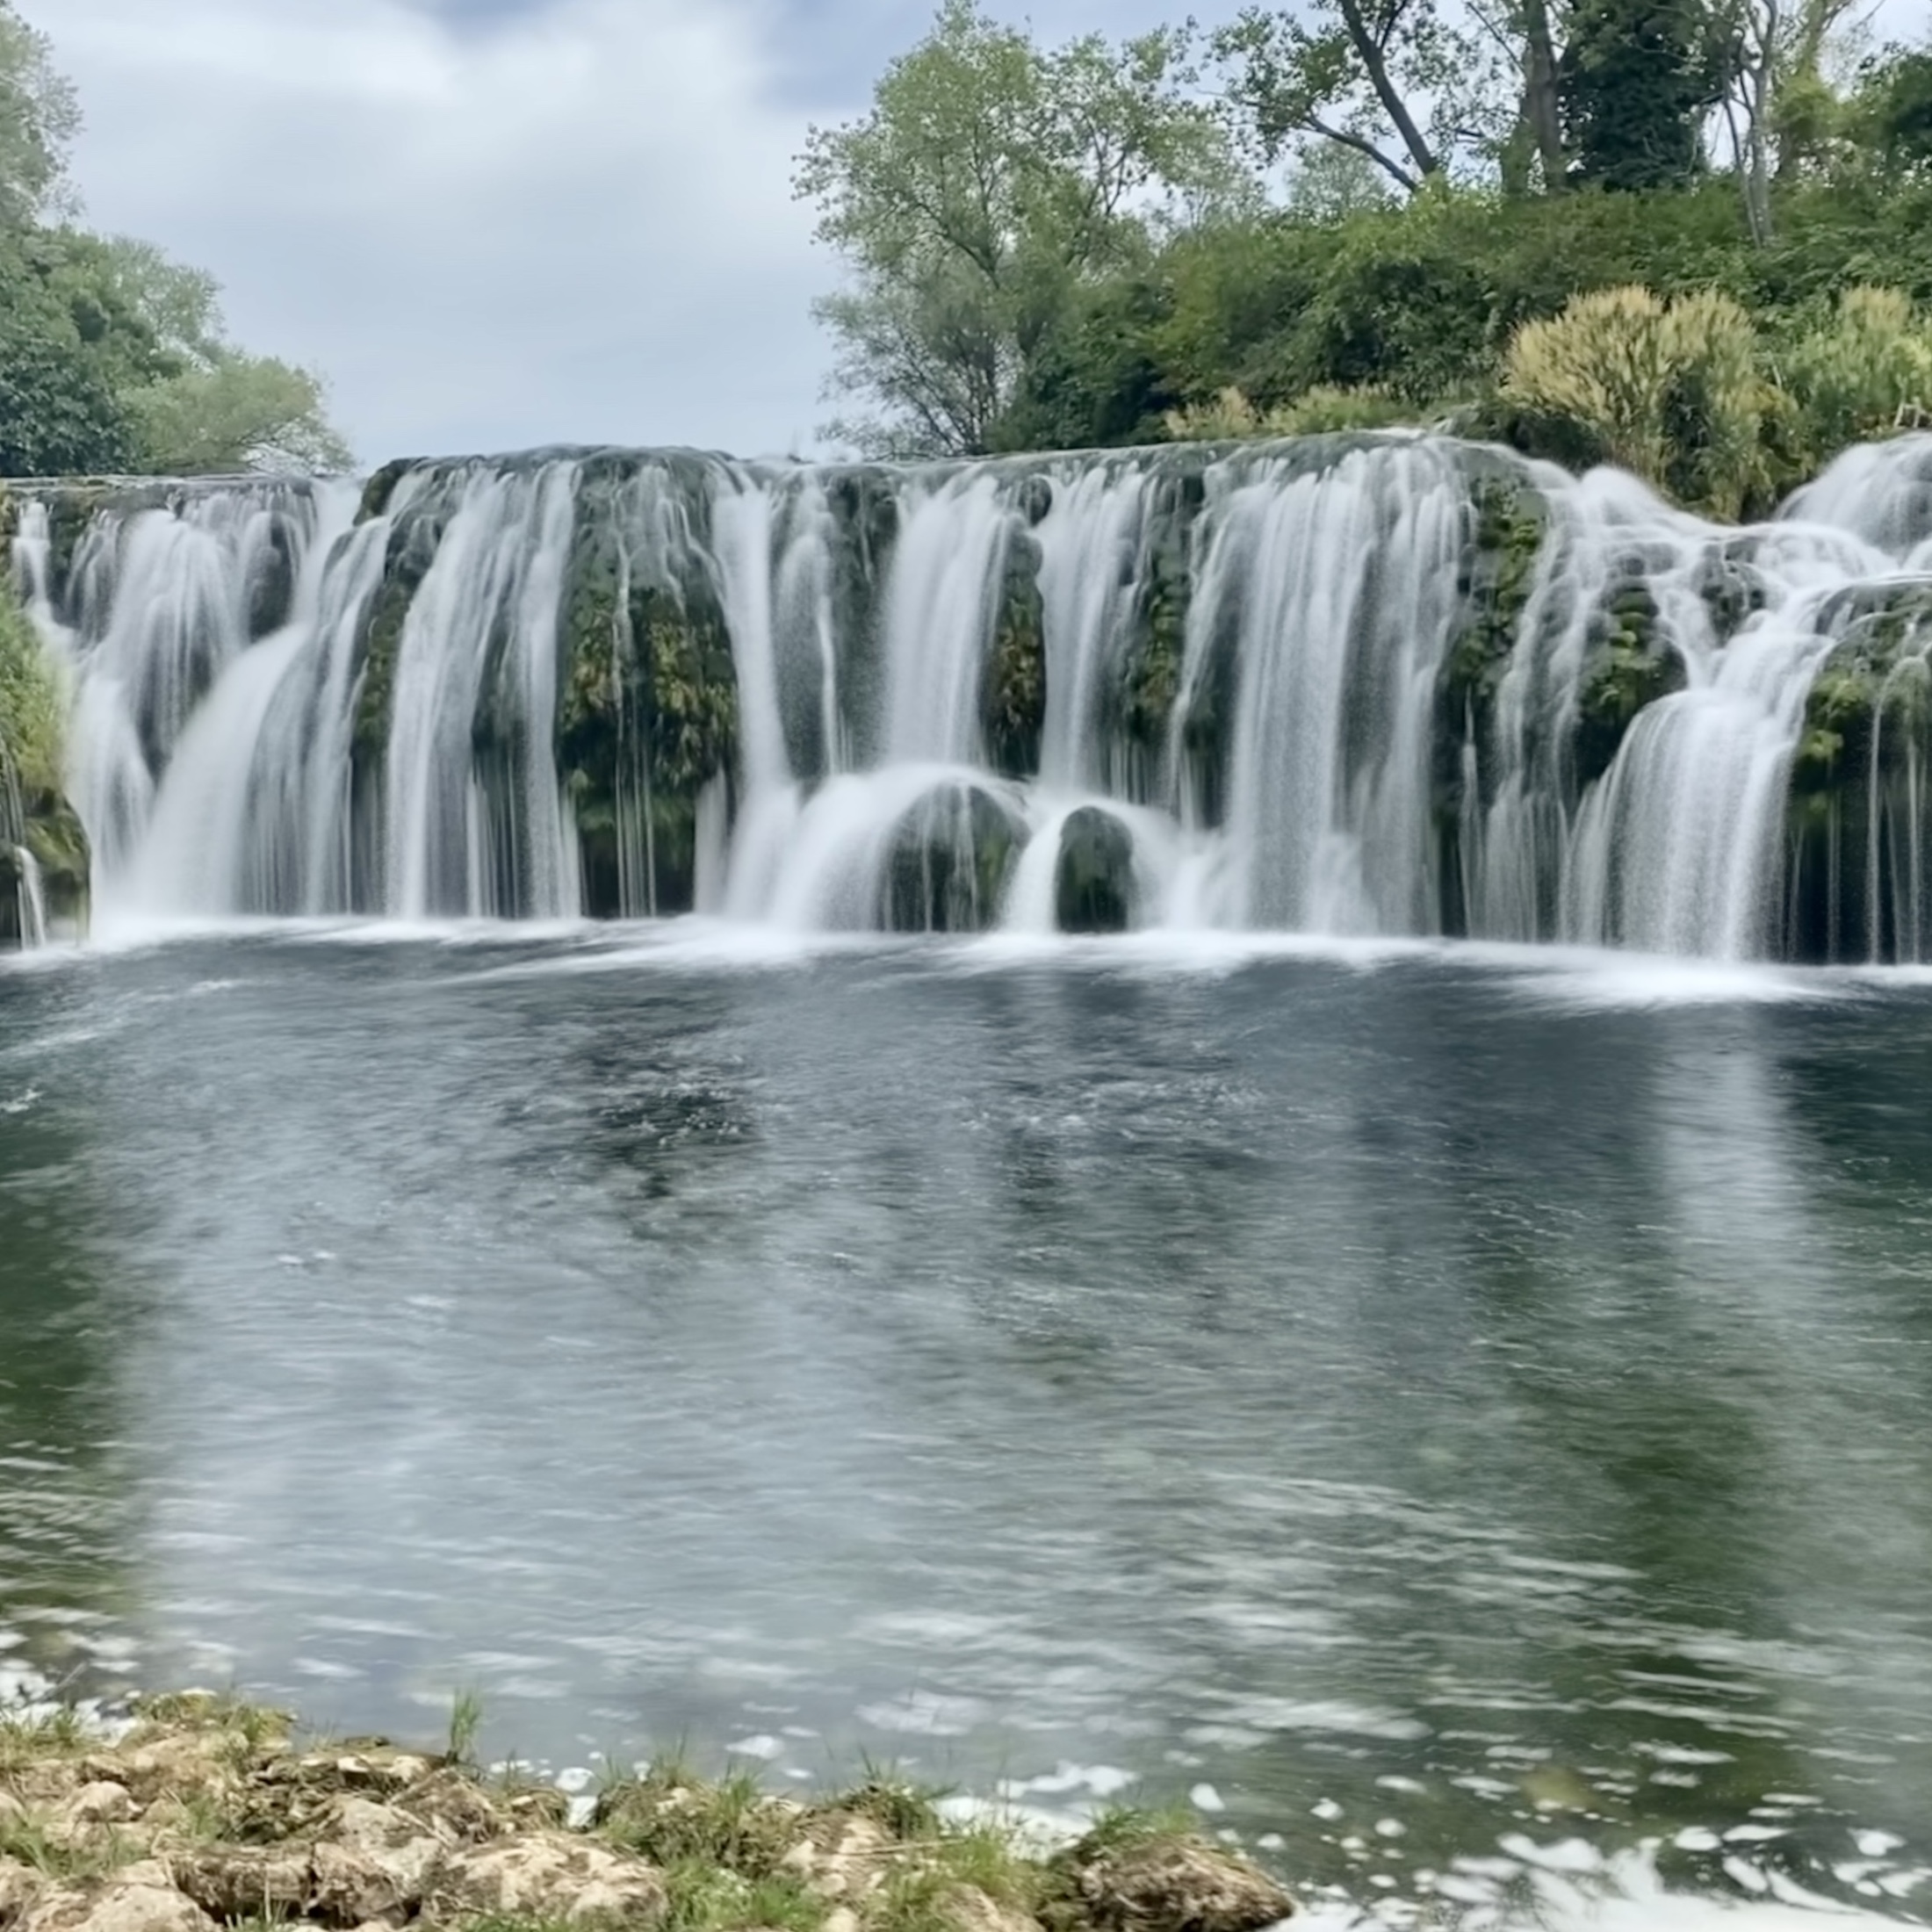 ljubuski waterfalls, bosnia and herzegovina